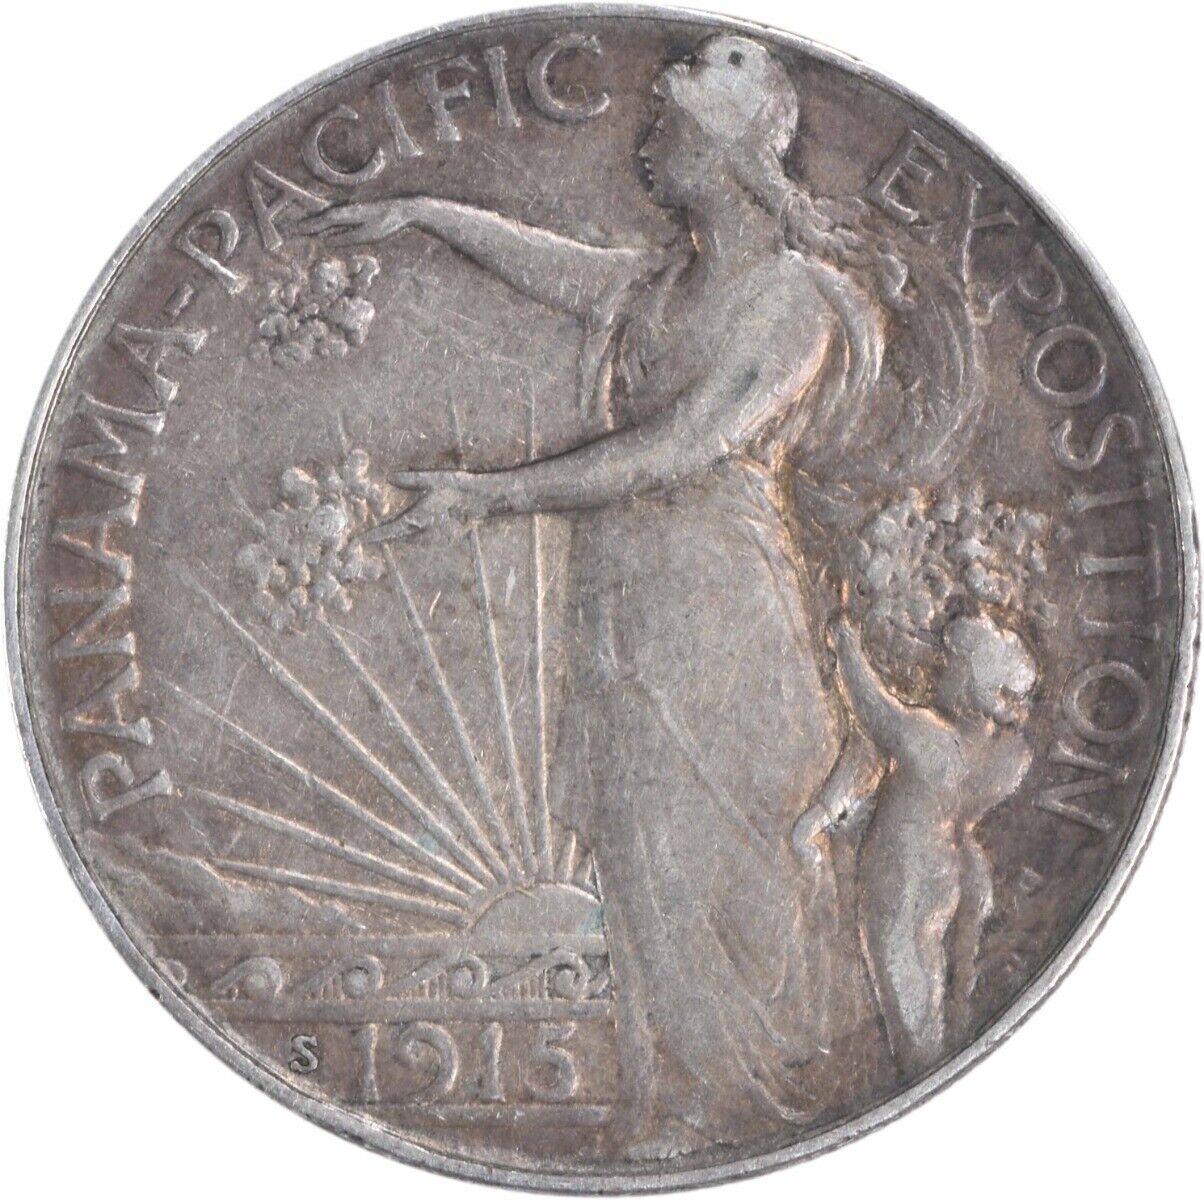 Panama-Pacific Commemorative Silver Half Dollar 1915 VF Uncertified #609